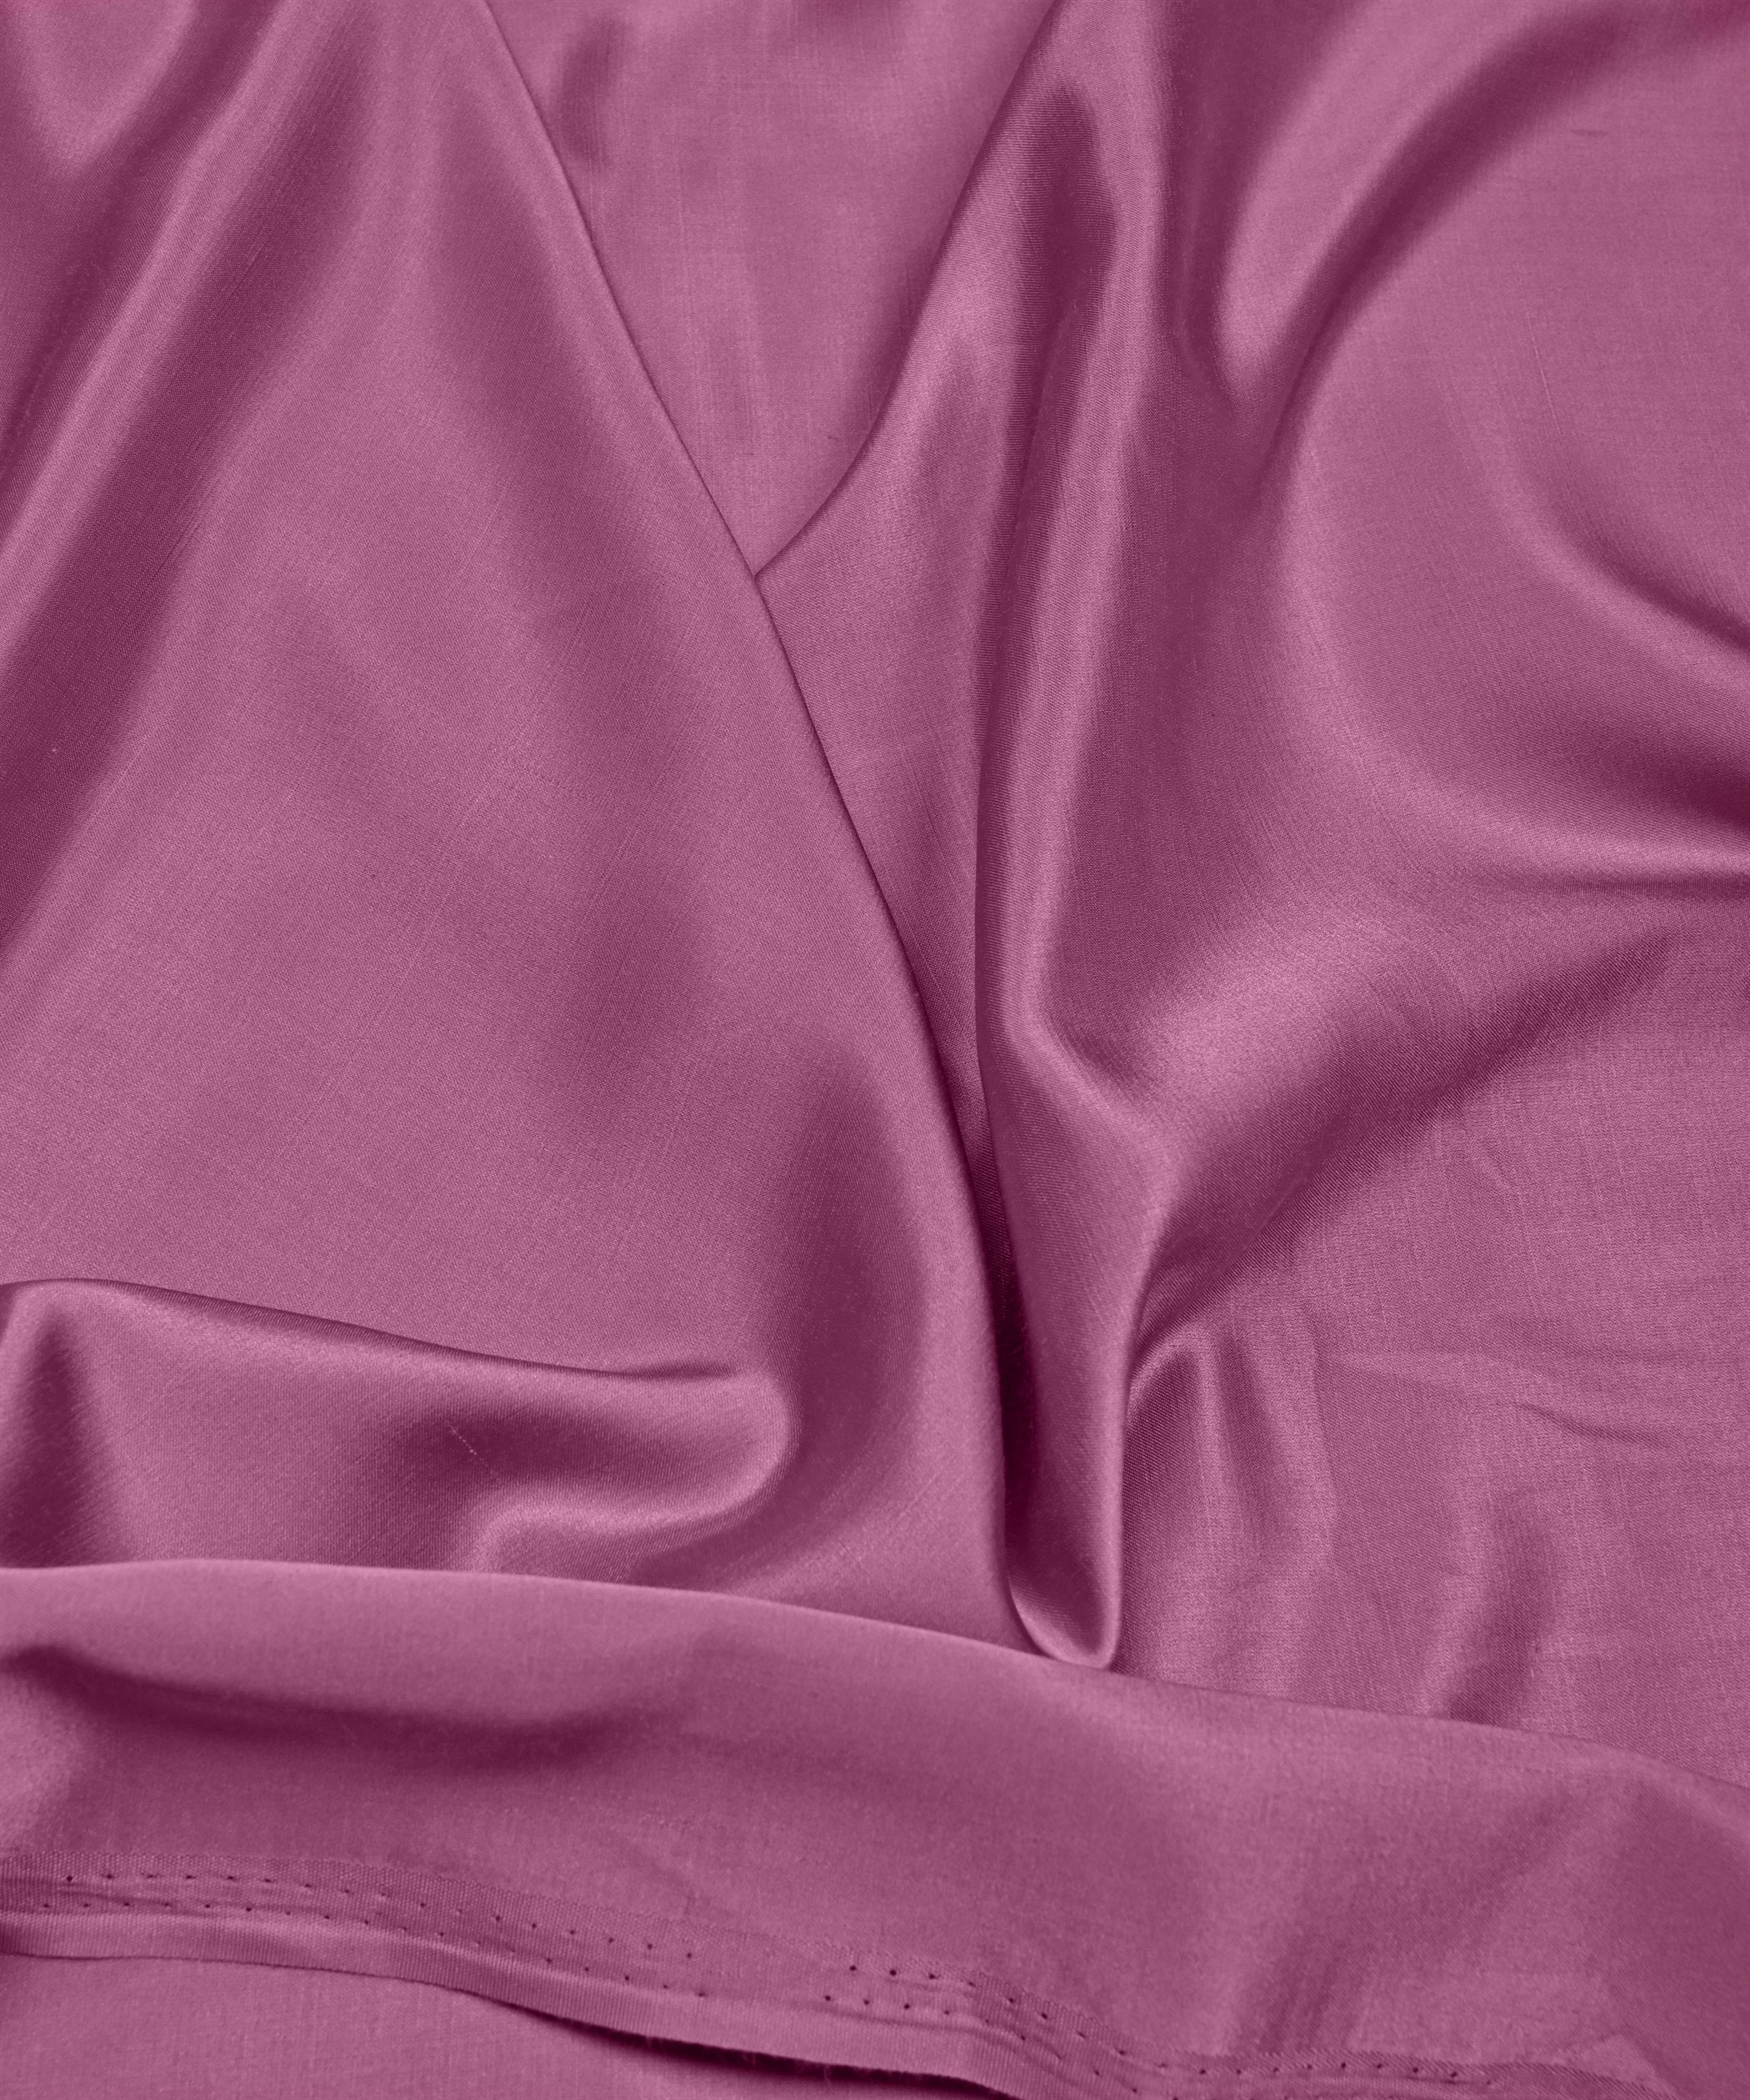 Raspberry Purple Plain Dyed Modal Satin Fabric